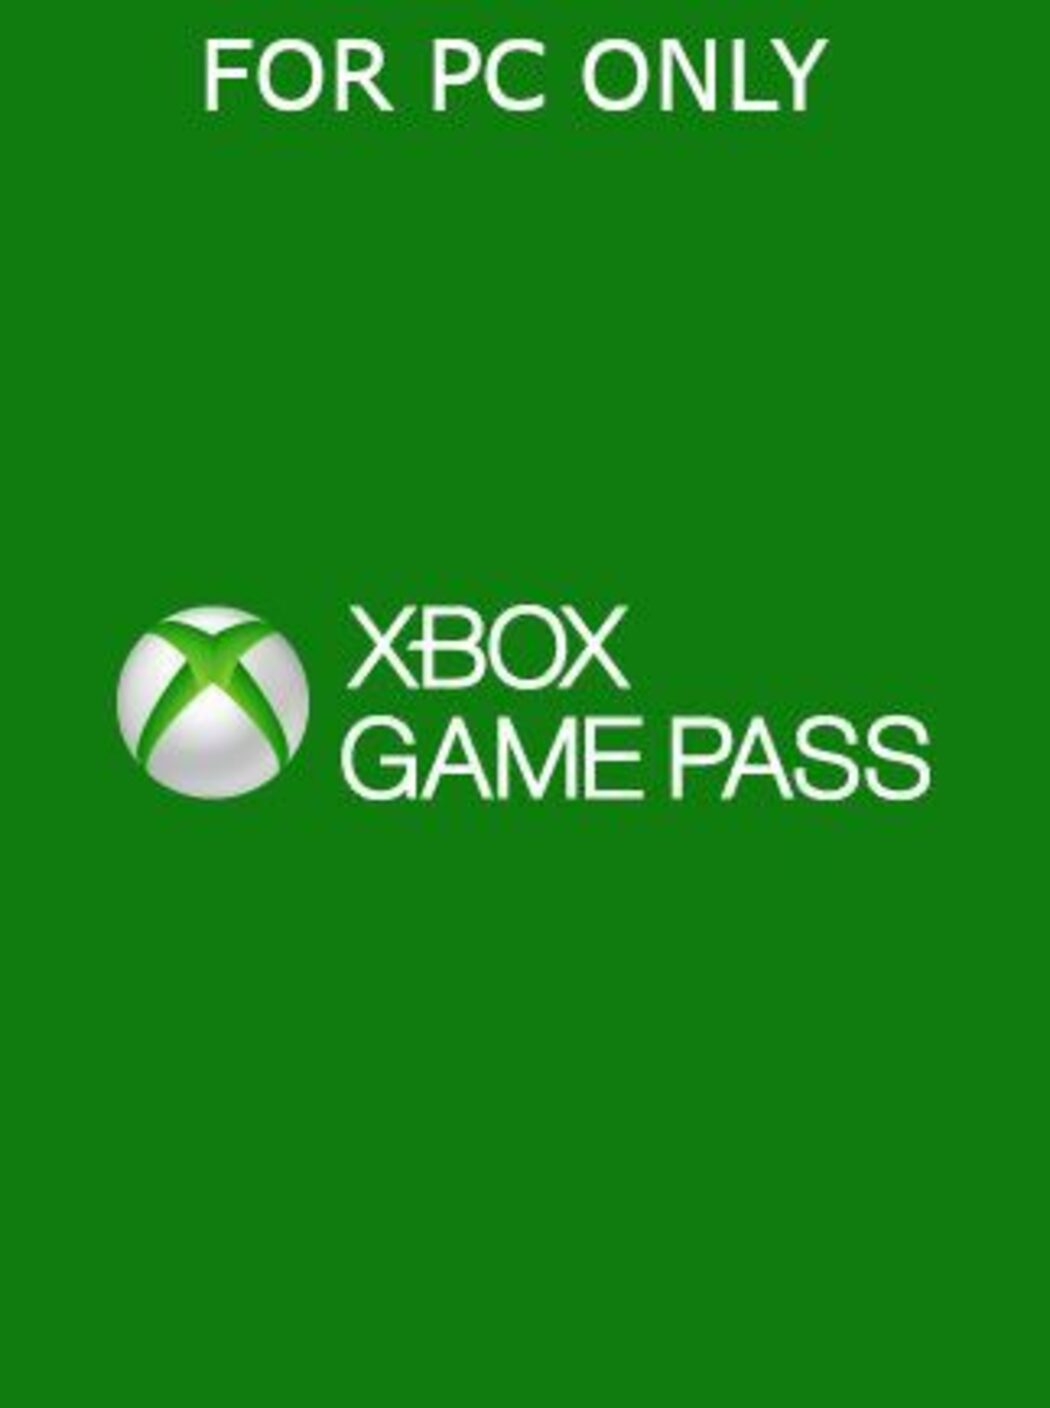 xbox game pass price 1 month